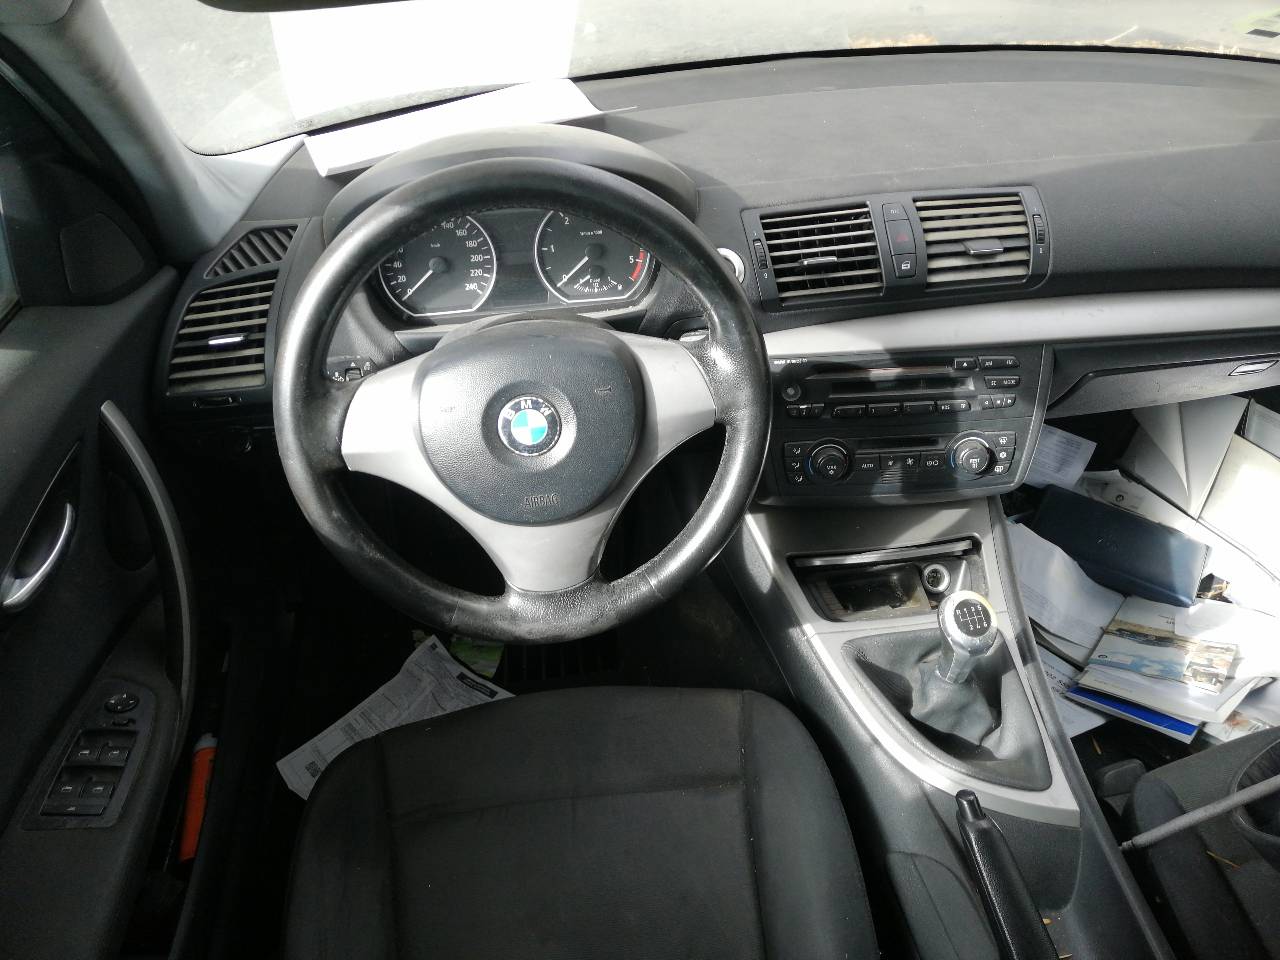 BMW 1 Series E81/E82/E87/E88 (2004-2013) Ratlankis (ratas) 6769401, R167JX16EH2IS44, ALUMINIO5P 24209465